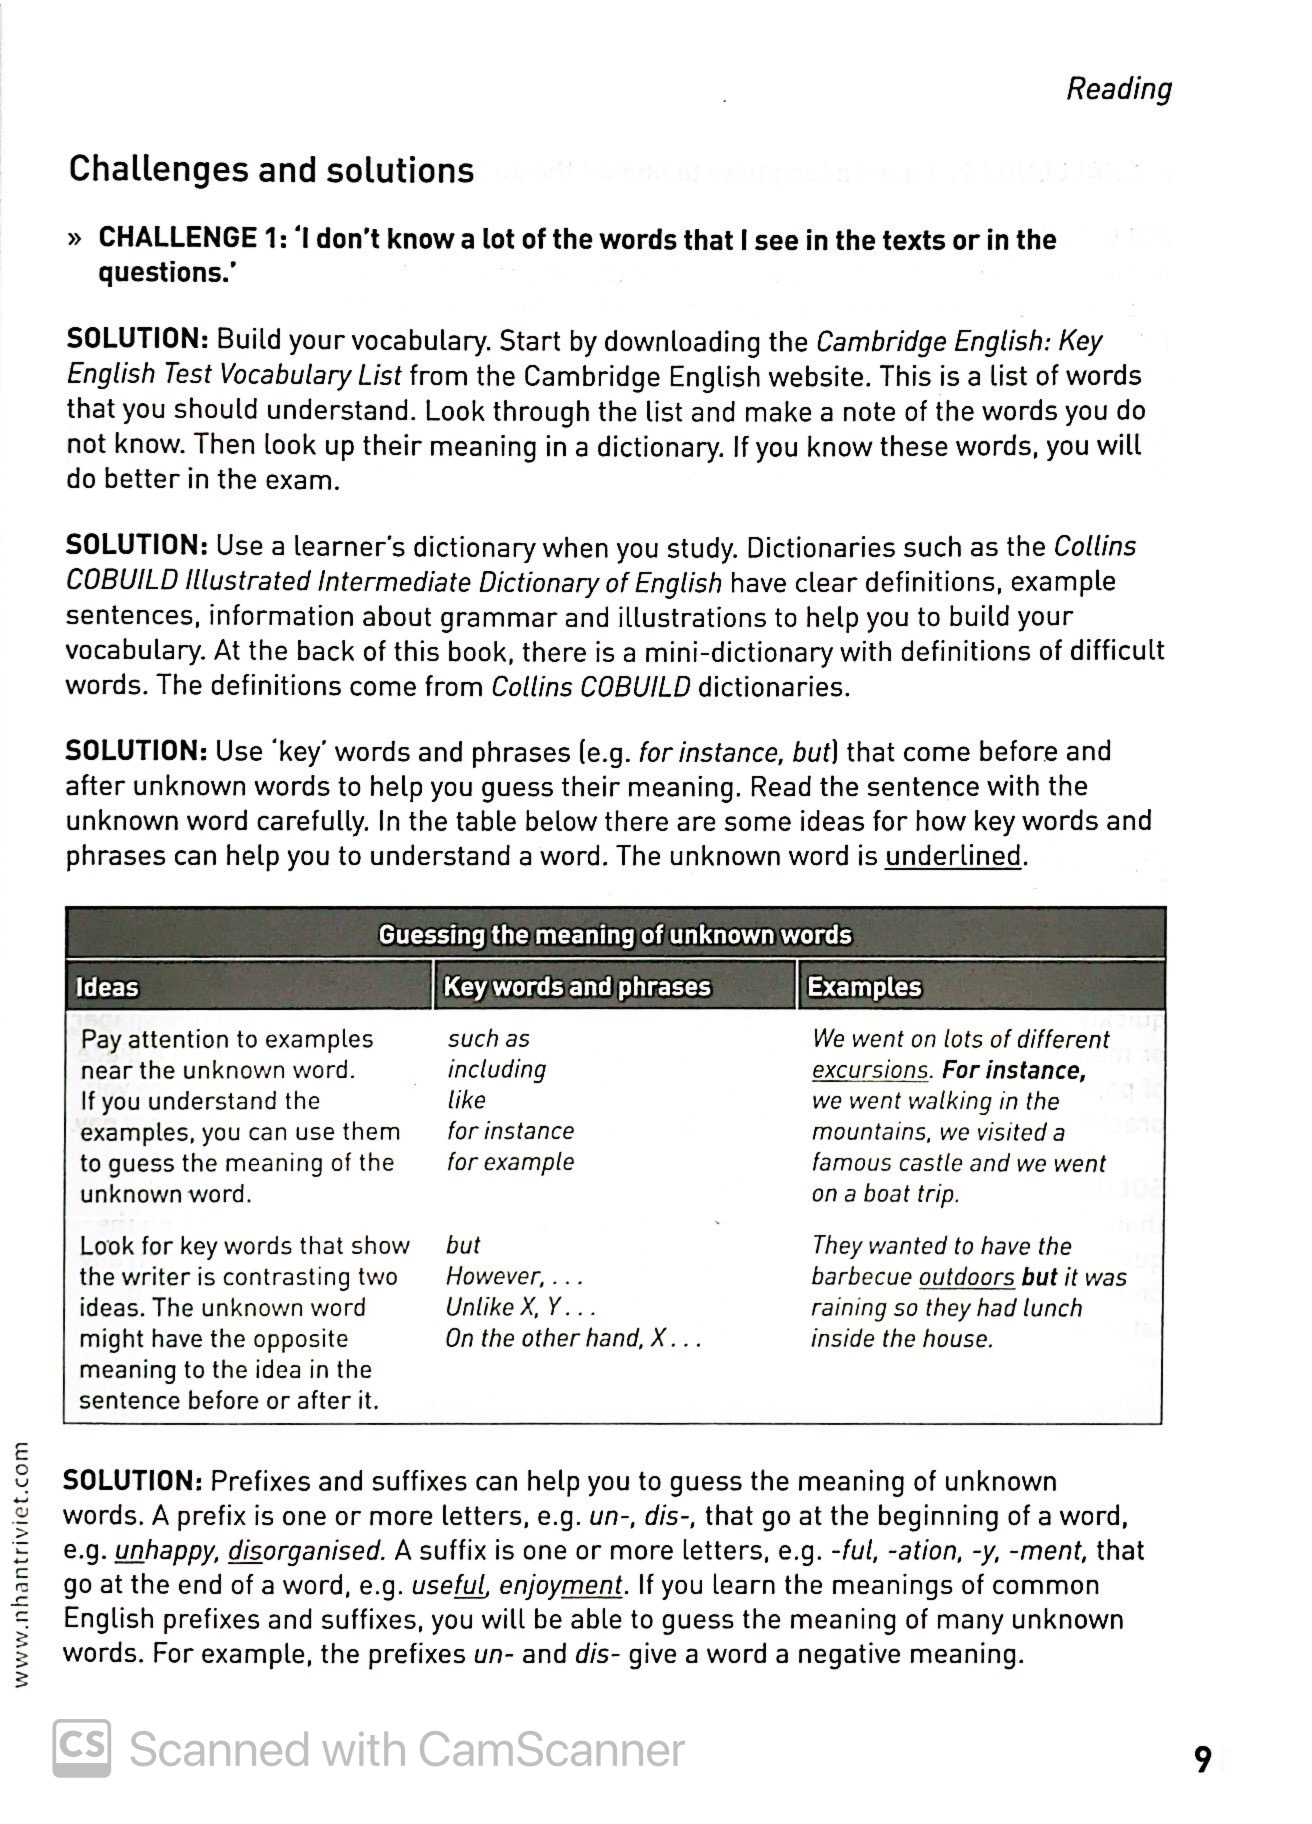 Cambridge English Key Four Practice Tests CD PDF